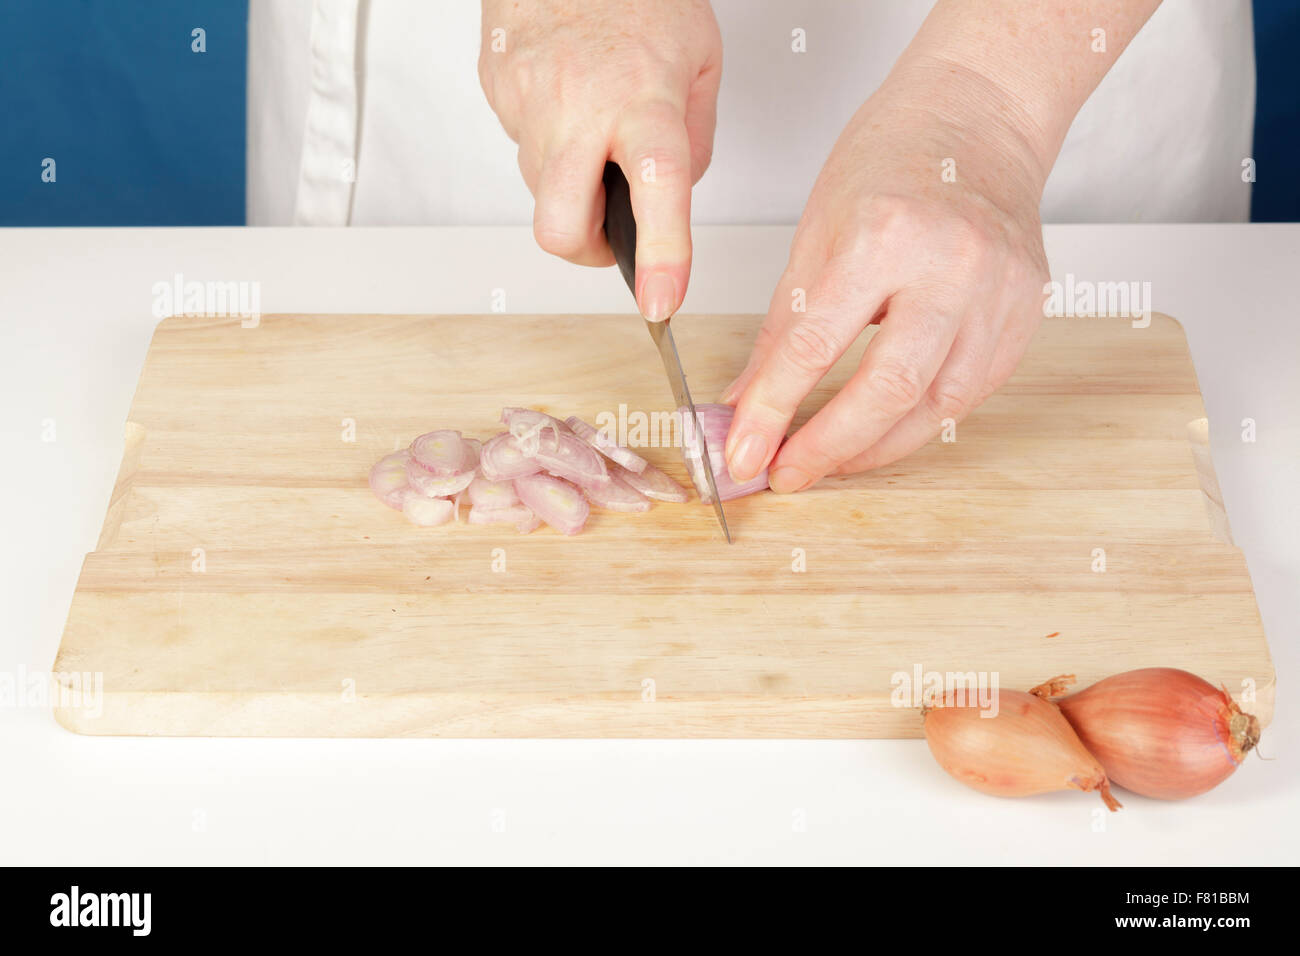 Chef cutting shallots Stock Photo